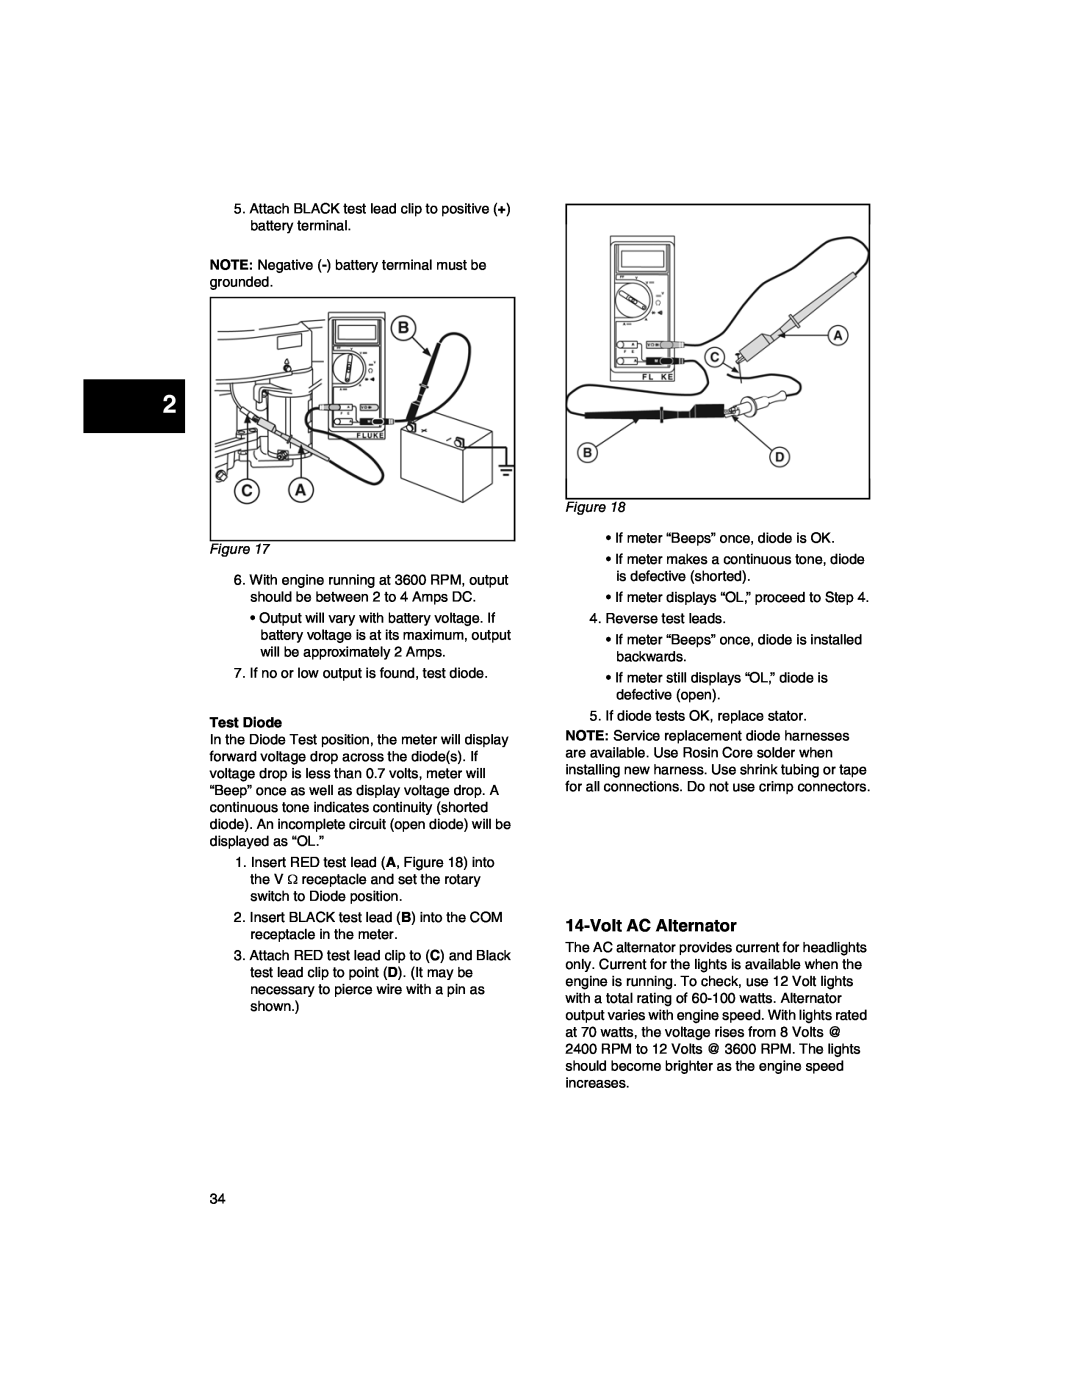 Briggs & Stratton CE8069, 271172, 270962, 276535, 273521 manual VoltAC Alternator, Test Diode 